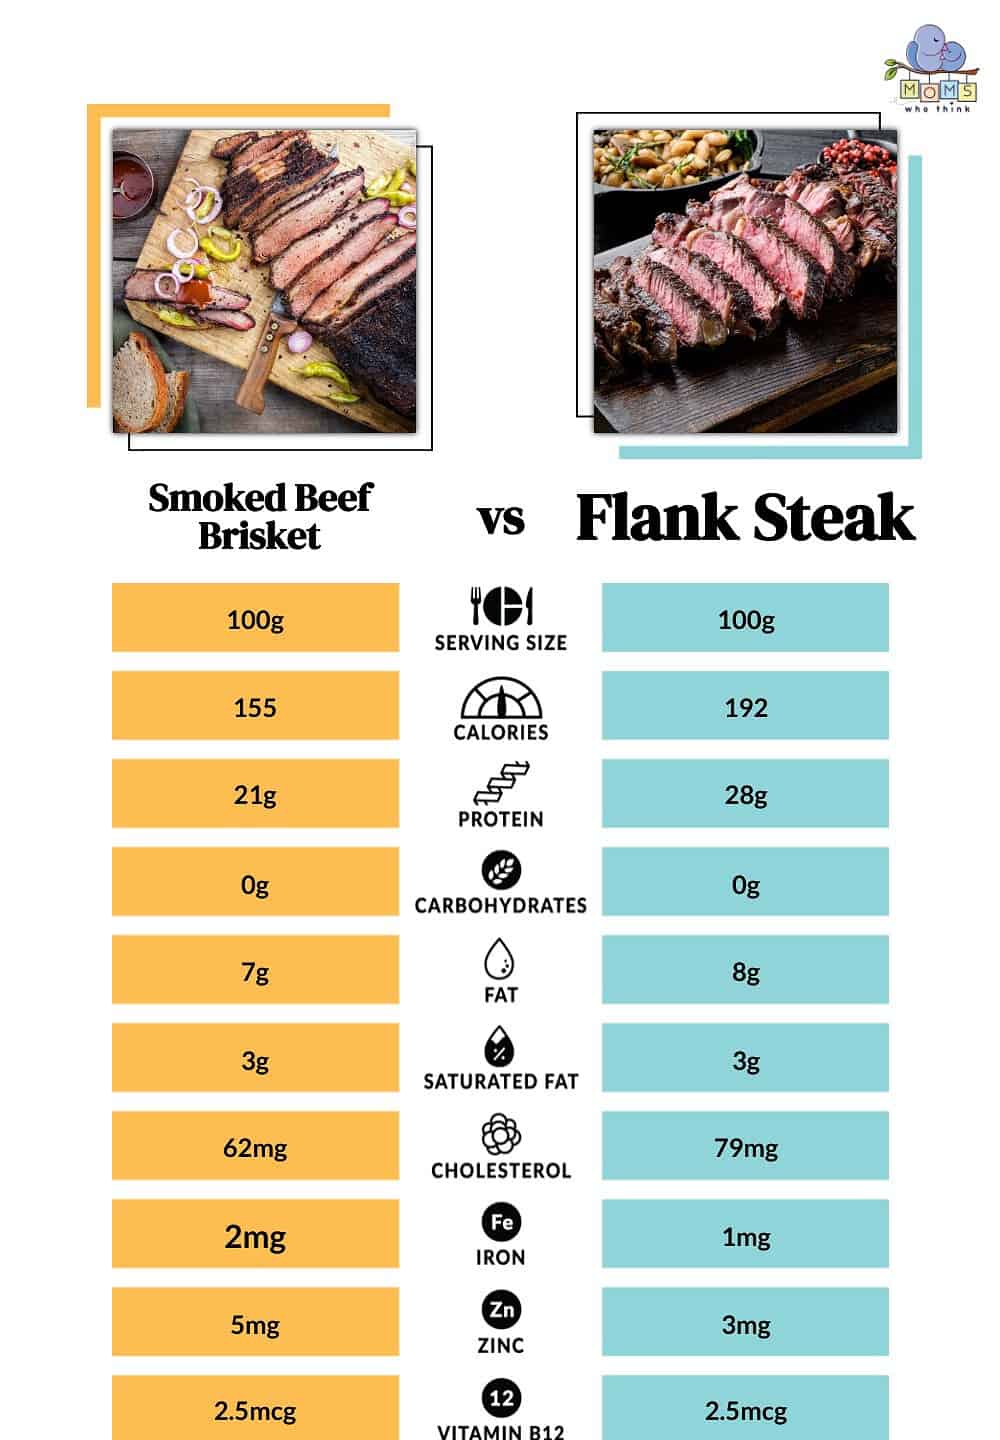 Smoked Beef Brisket vs Flank Steak Nutrition Comparison